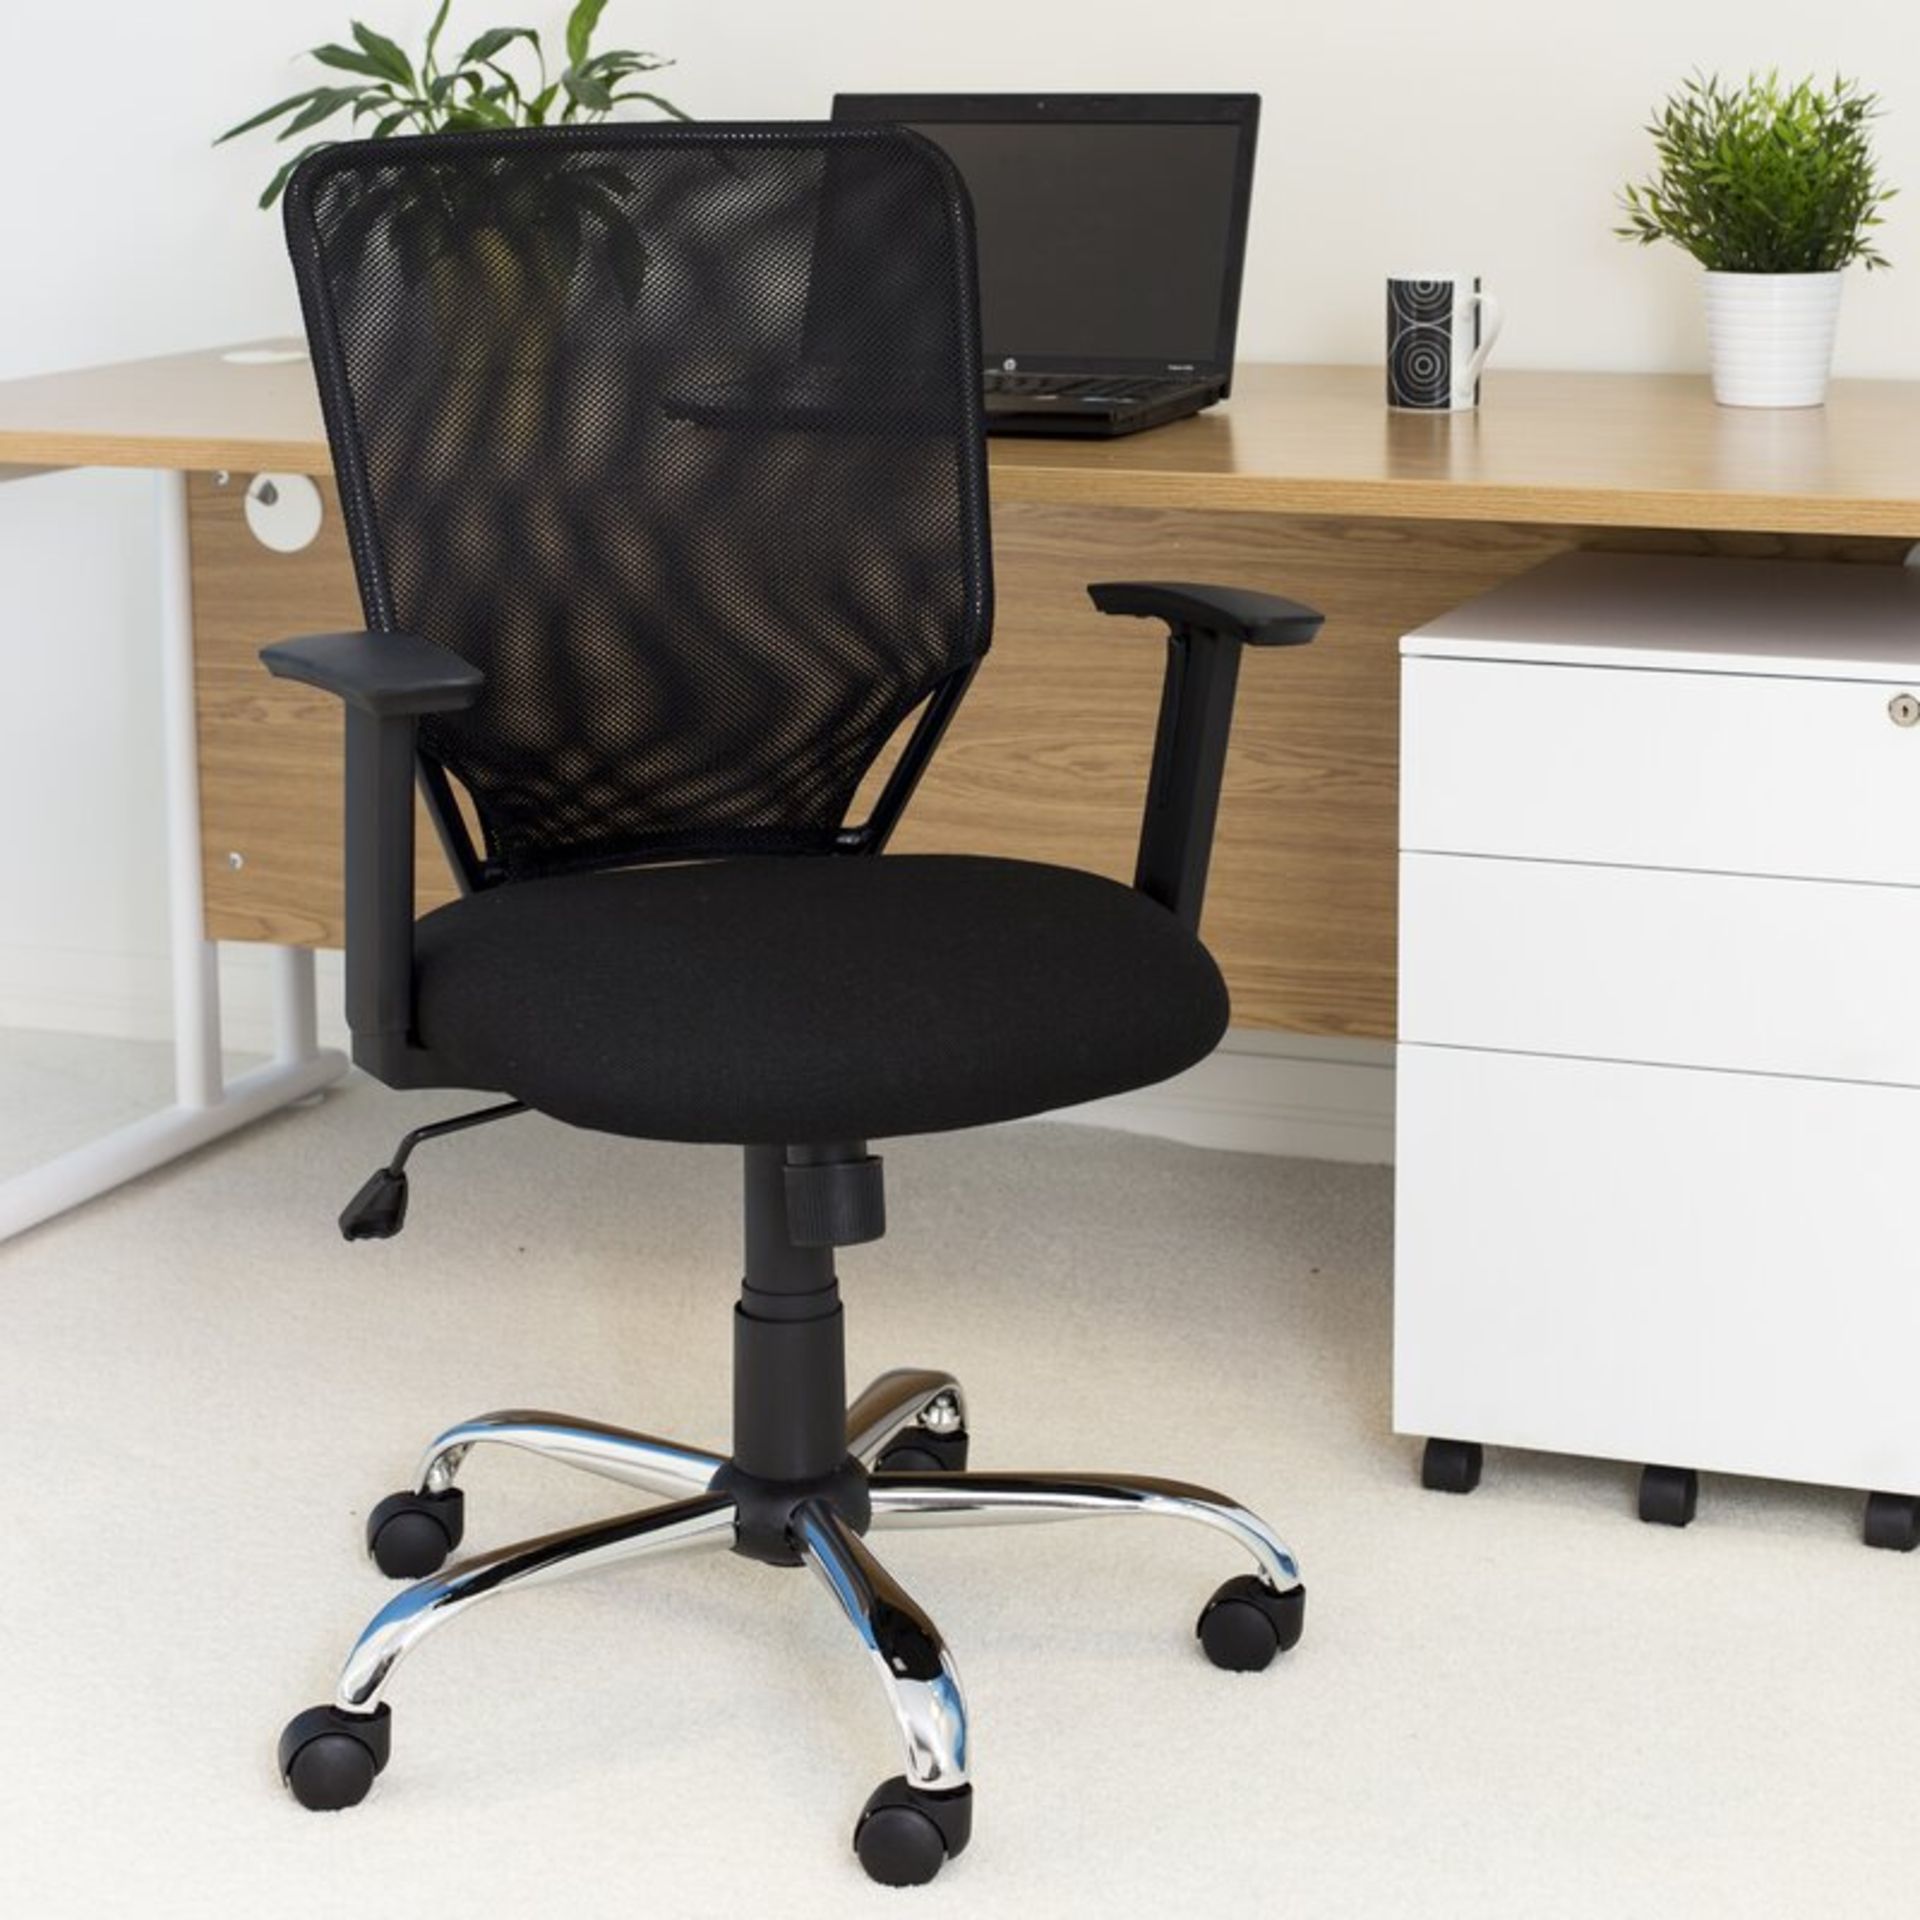 Mesh Desk Chair - RRP £108.99